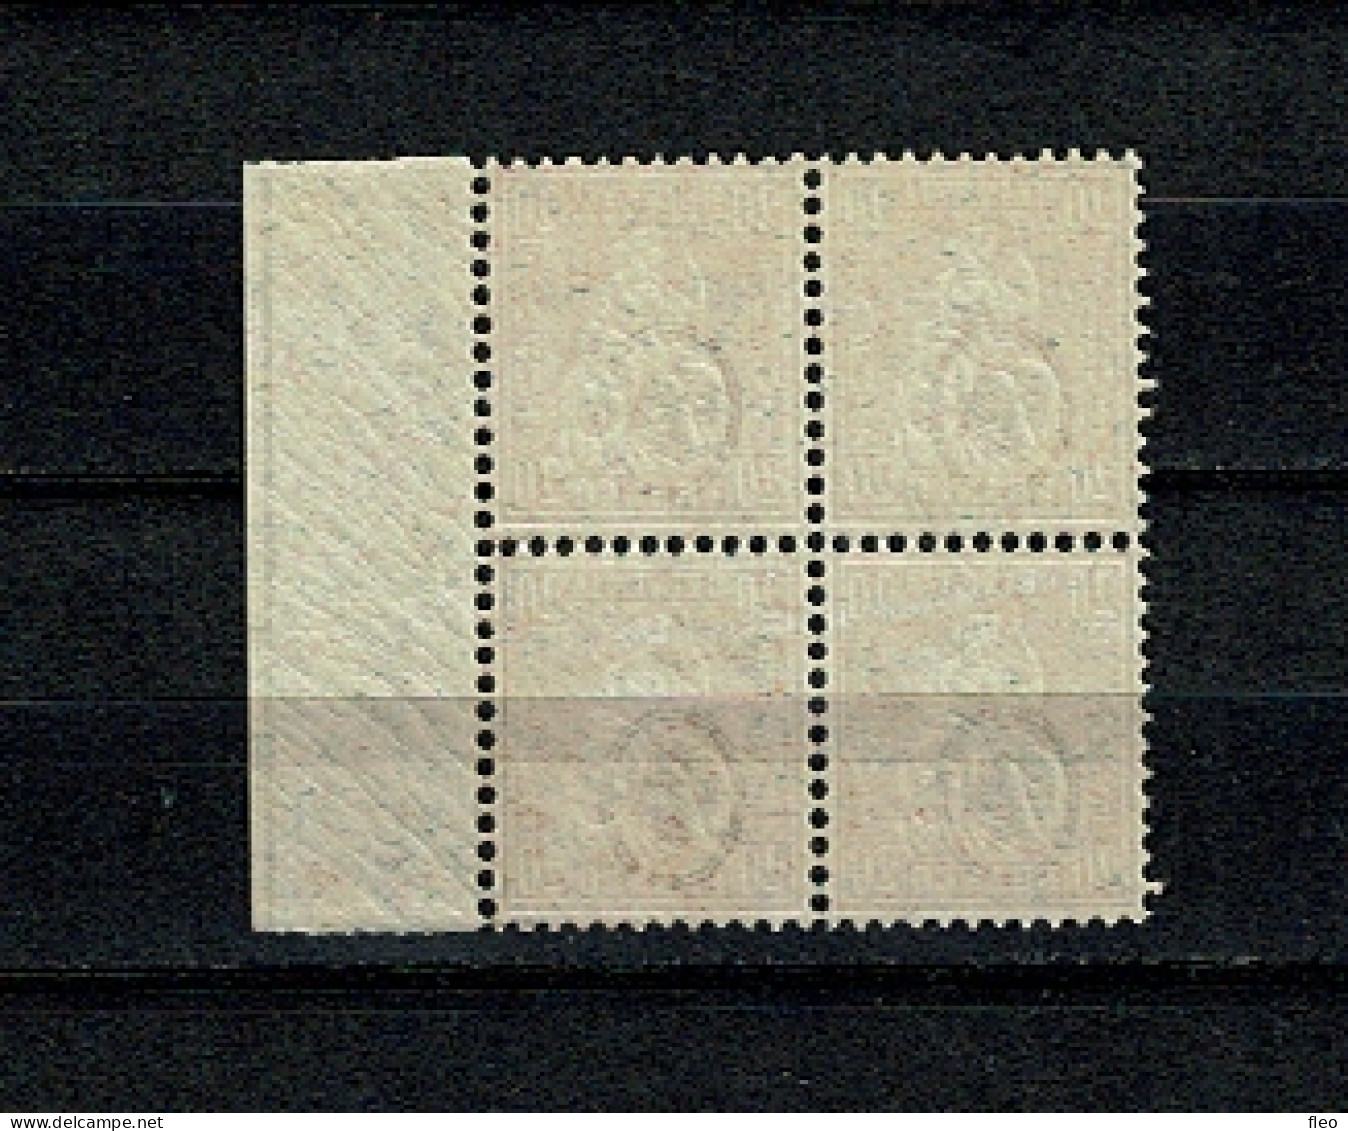 Switzerland Timbres - Suisse -1862-1881 - 4 X 20 C. - Yvert N° 37 - Non Oblitéré - Dentelés -MNH** - Ungebraucht